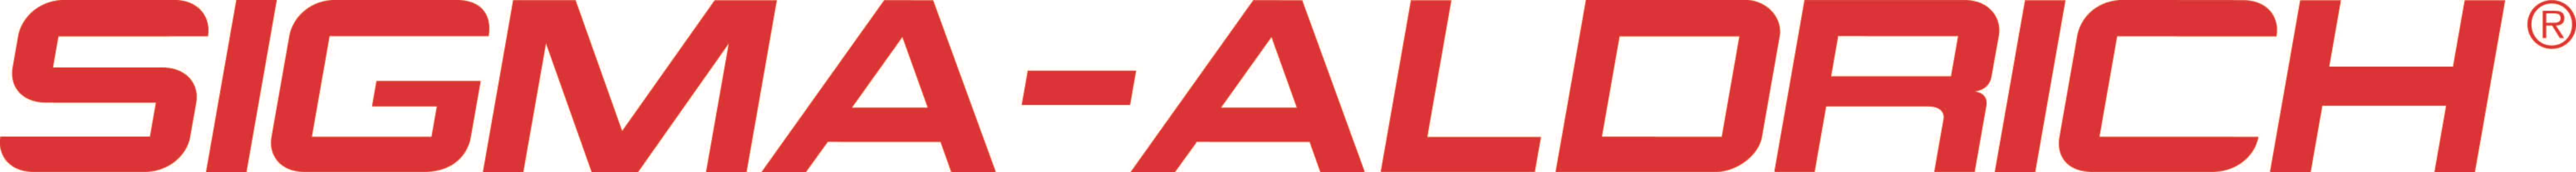 Sigma Aldrich. Sigma Aldrich лого. Этикетка Sigma Aldrich. "Sigma-Aldrich", США.